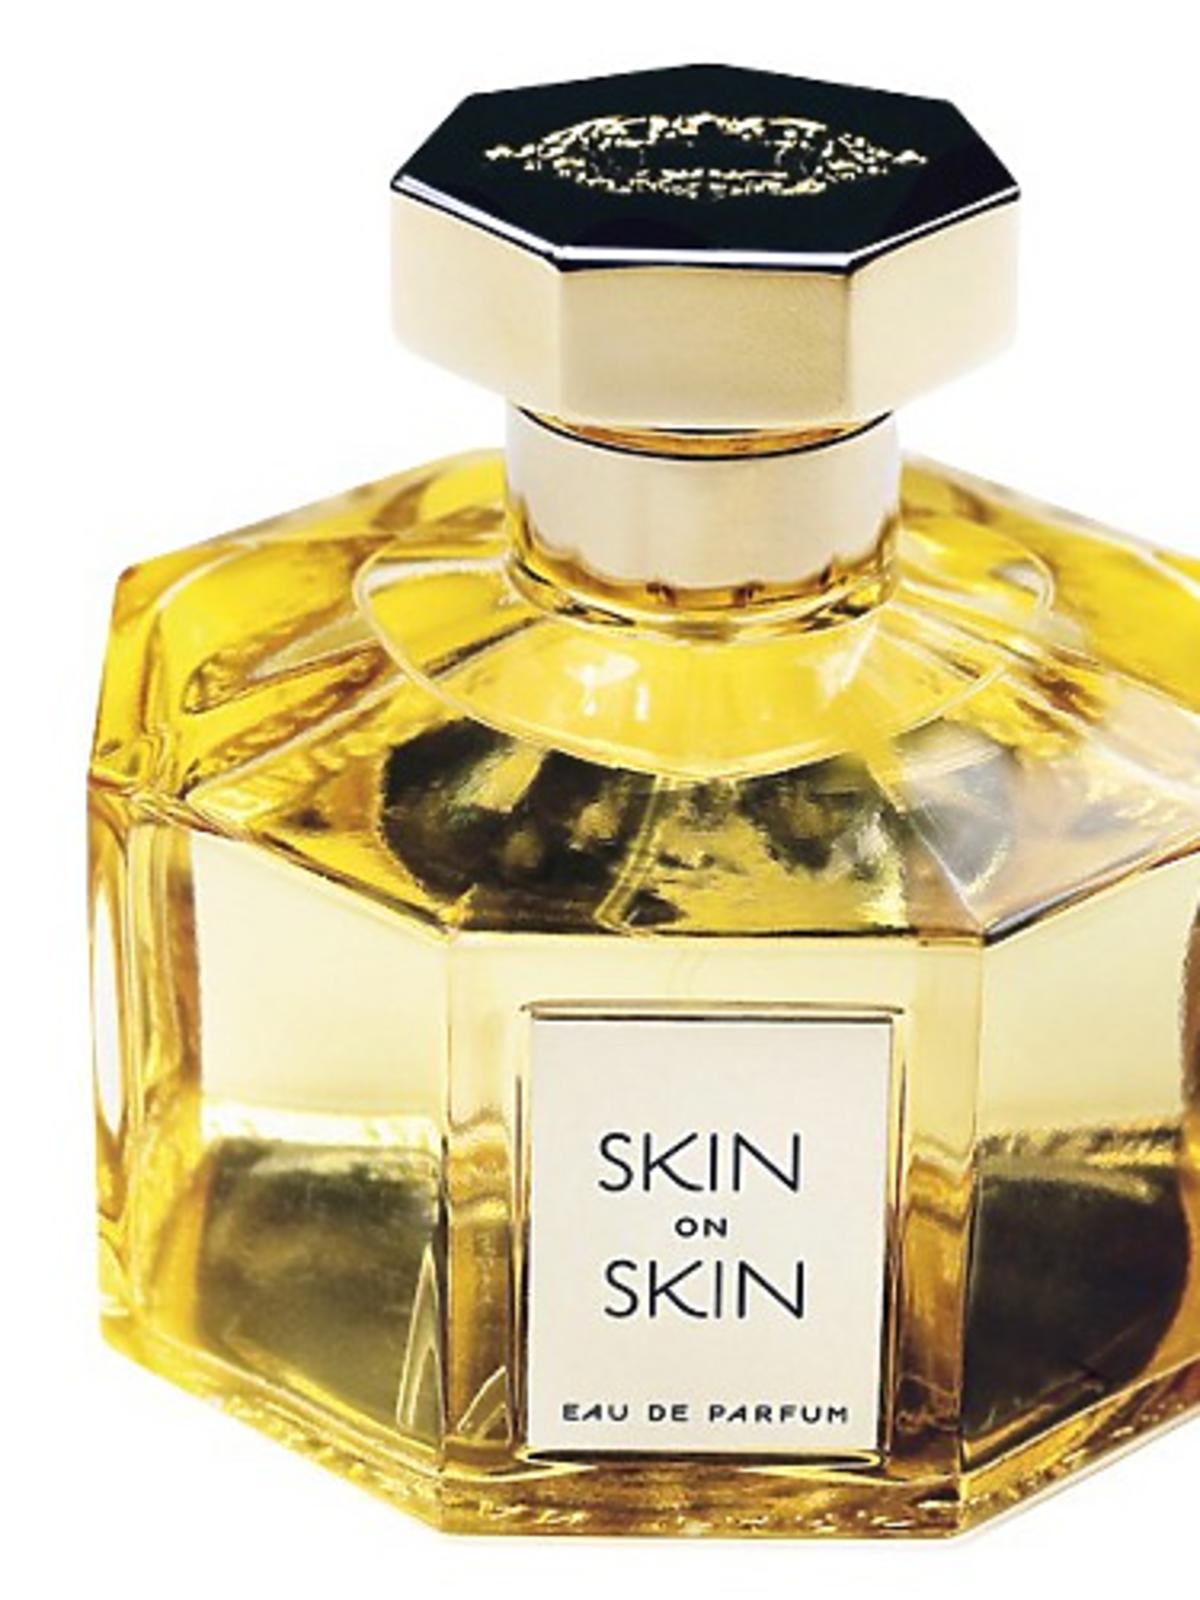 Skin on Skin L’Artisan Parfumeur, 552zł / 100ml, galilu.pl